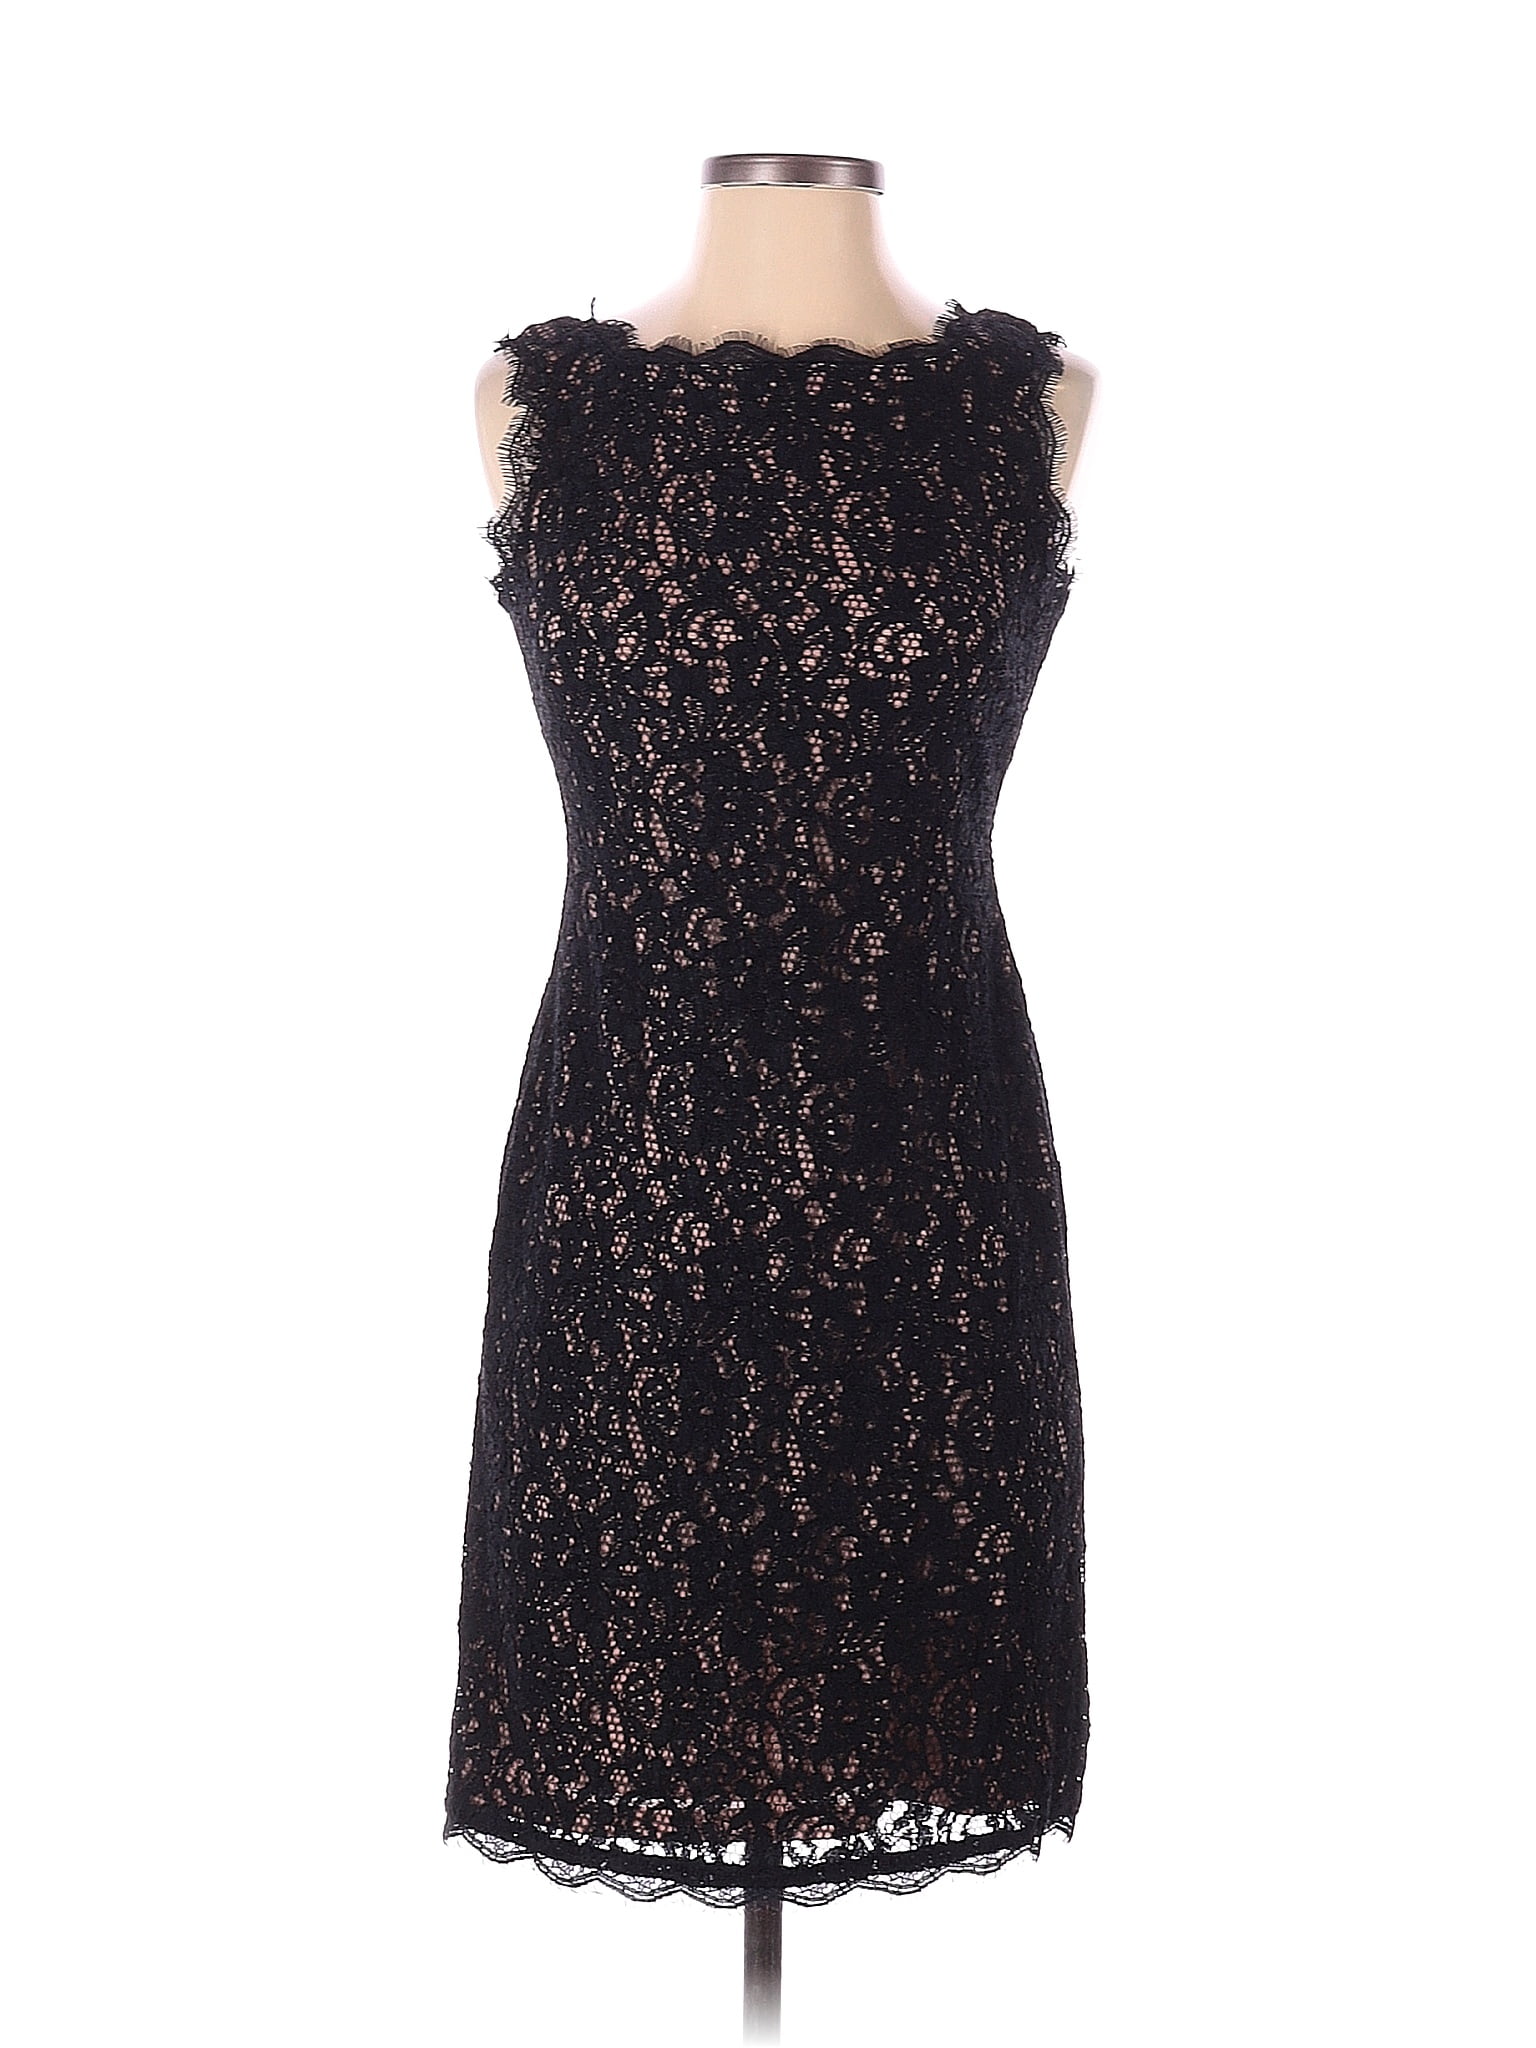 Adrianna Papell Black Cocktail Dress Size 2 - 79% off | thredUP